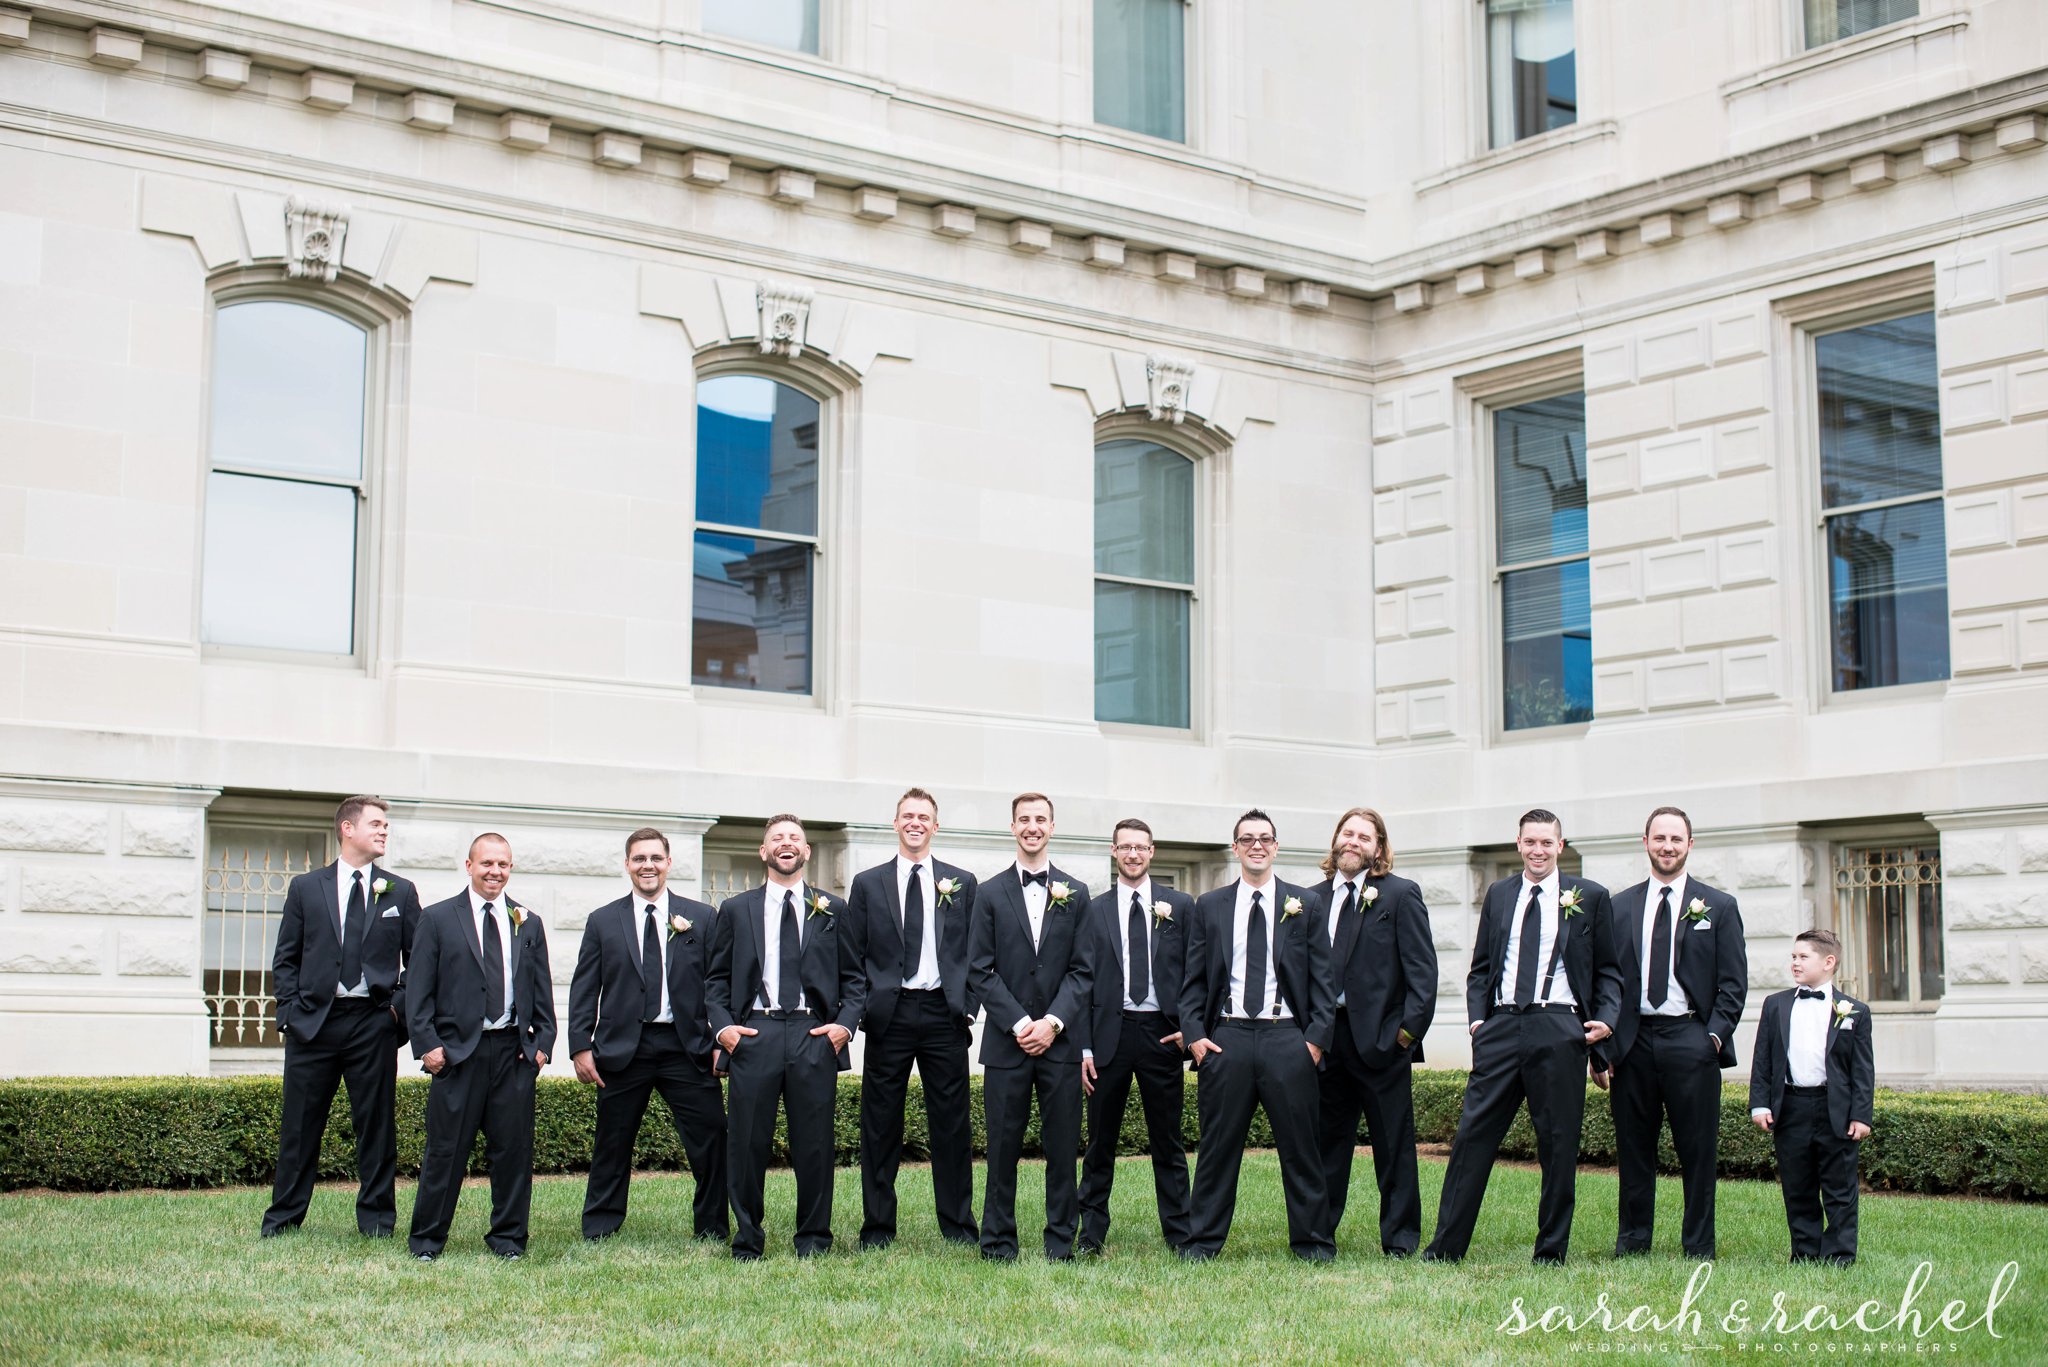 Indiana Statehouse wedding | groomsmen in black tuxedos